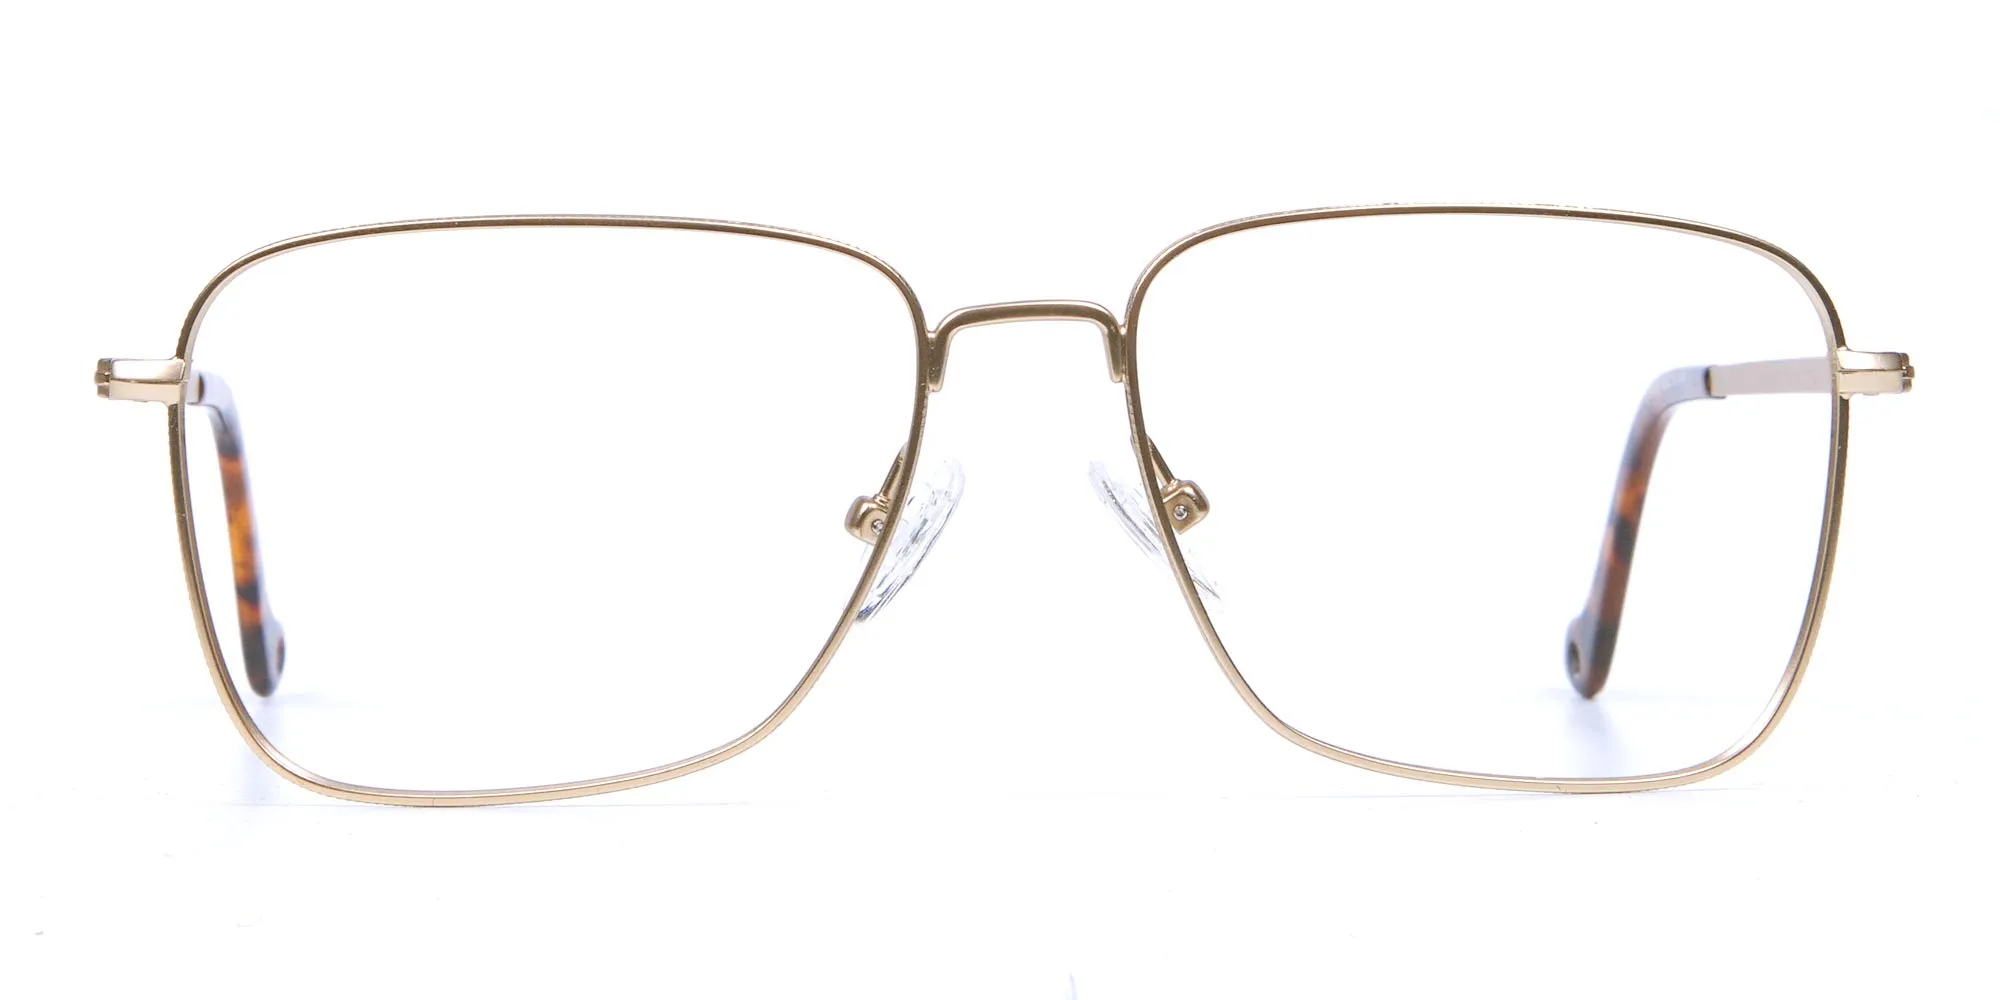 Retro Glasses Frame in Gold Metal with Tortoise Temple Tips, Eyeglasses -2